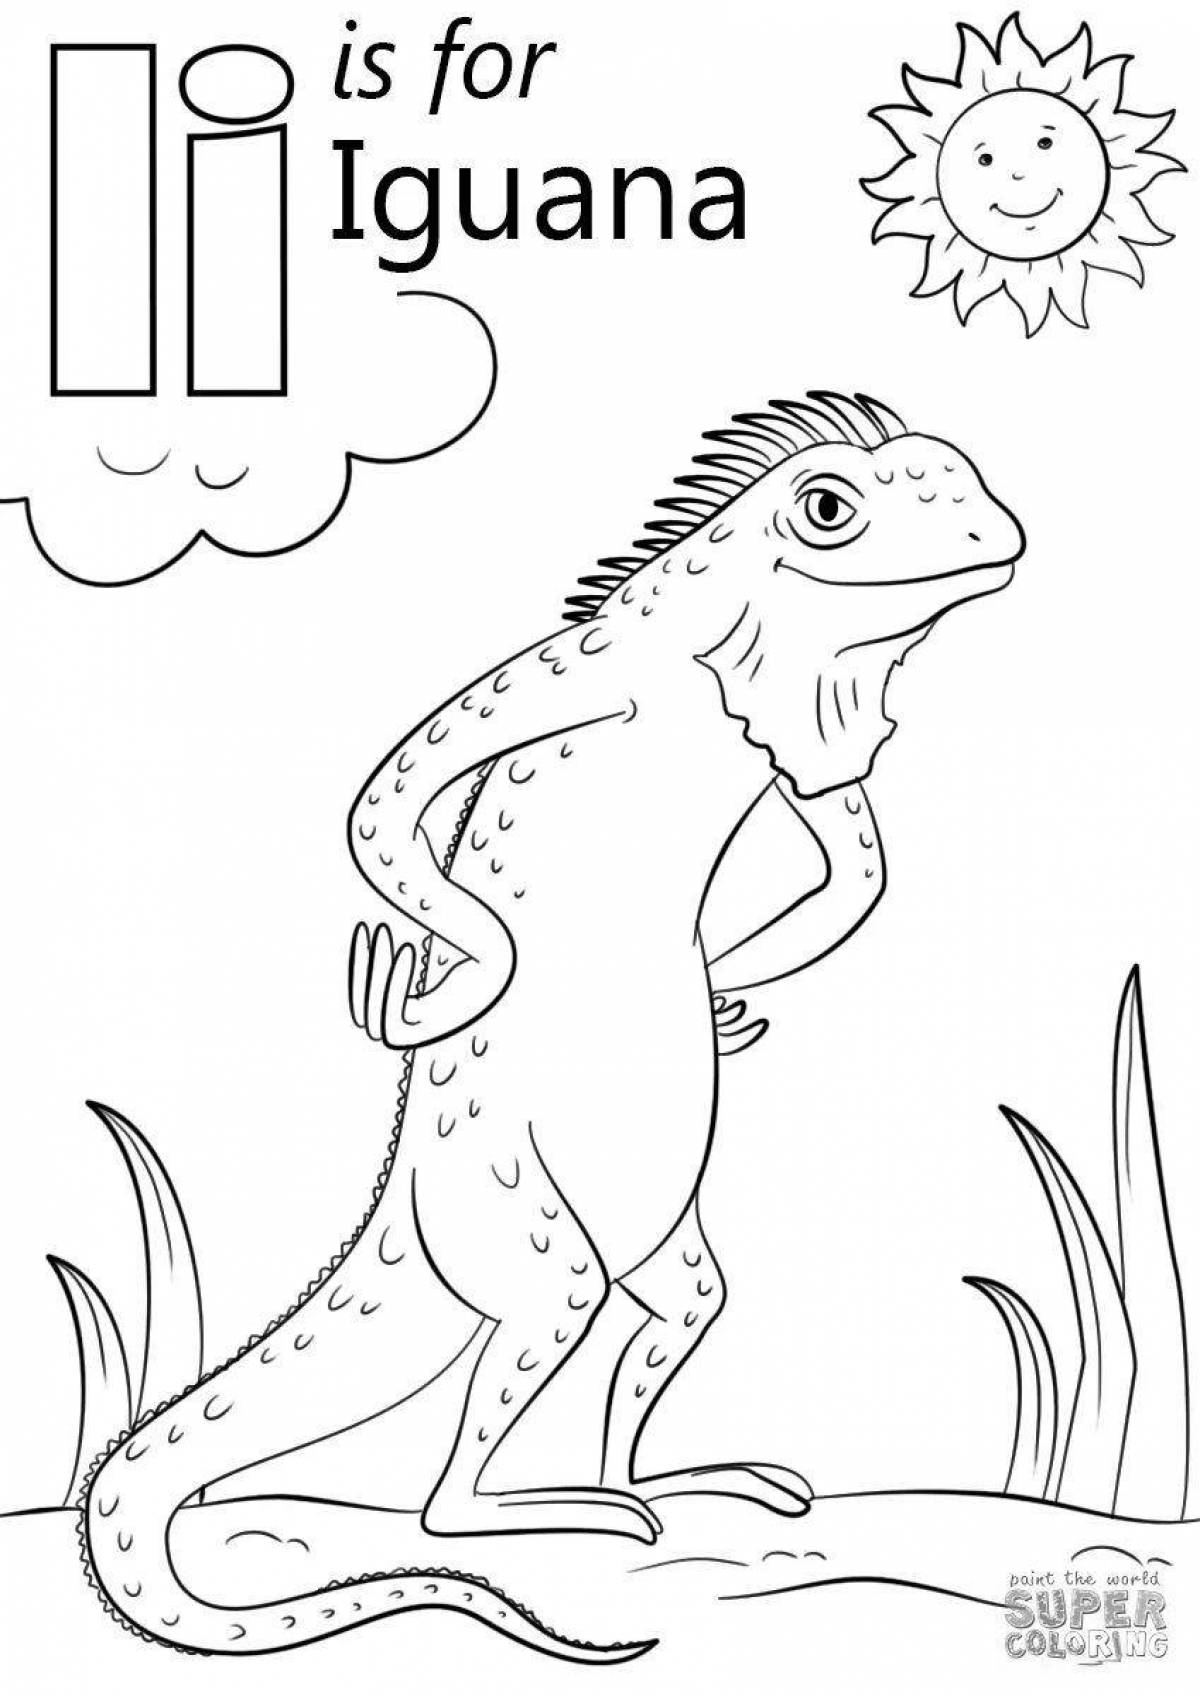 Joyful iguana coloring book for kids